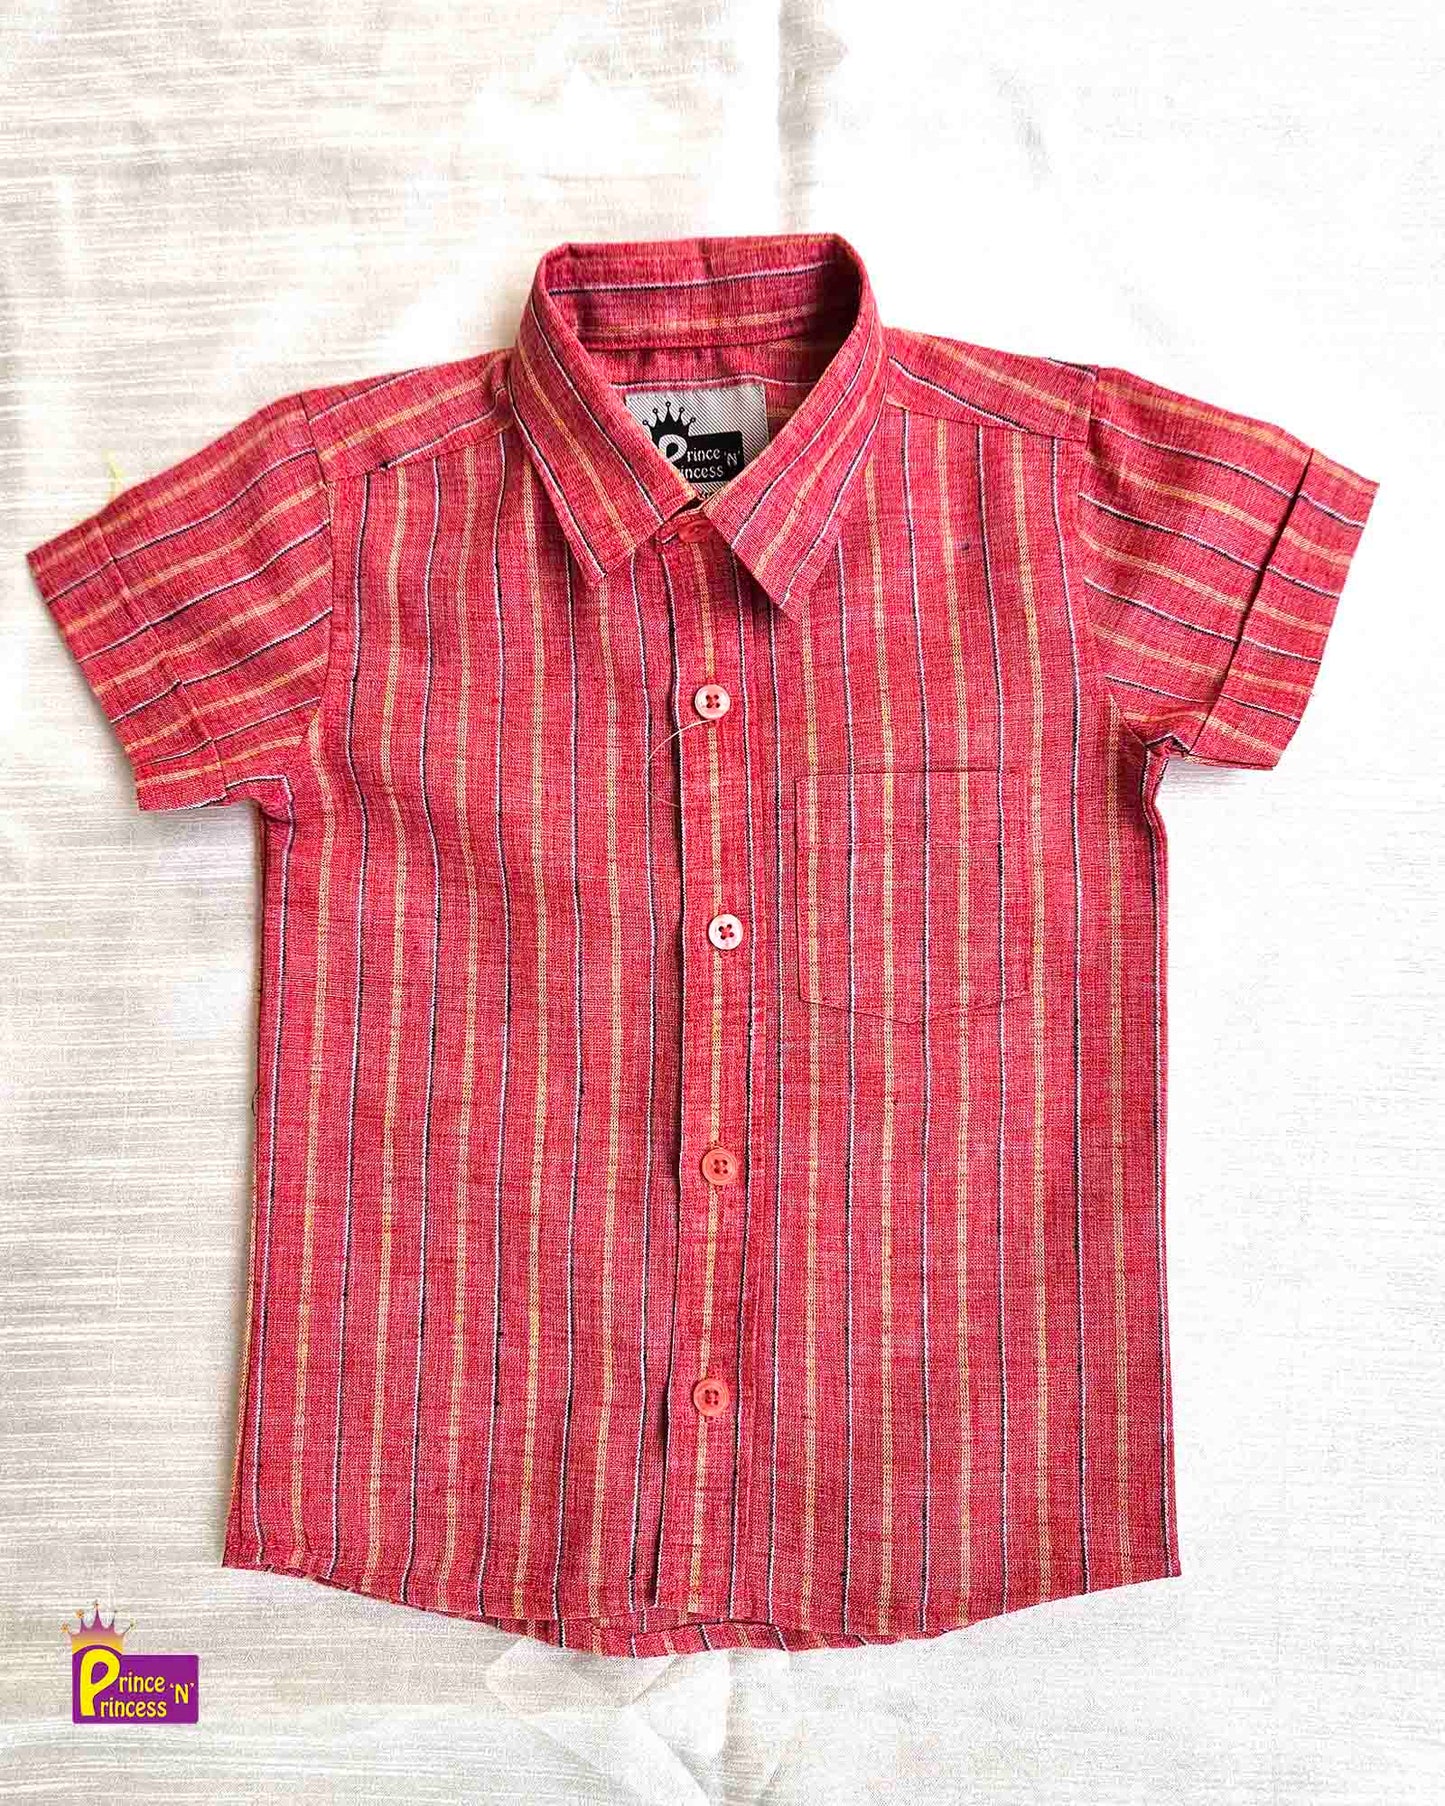 Kids Red Cotton  shirt ST155 Prince N Princess